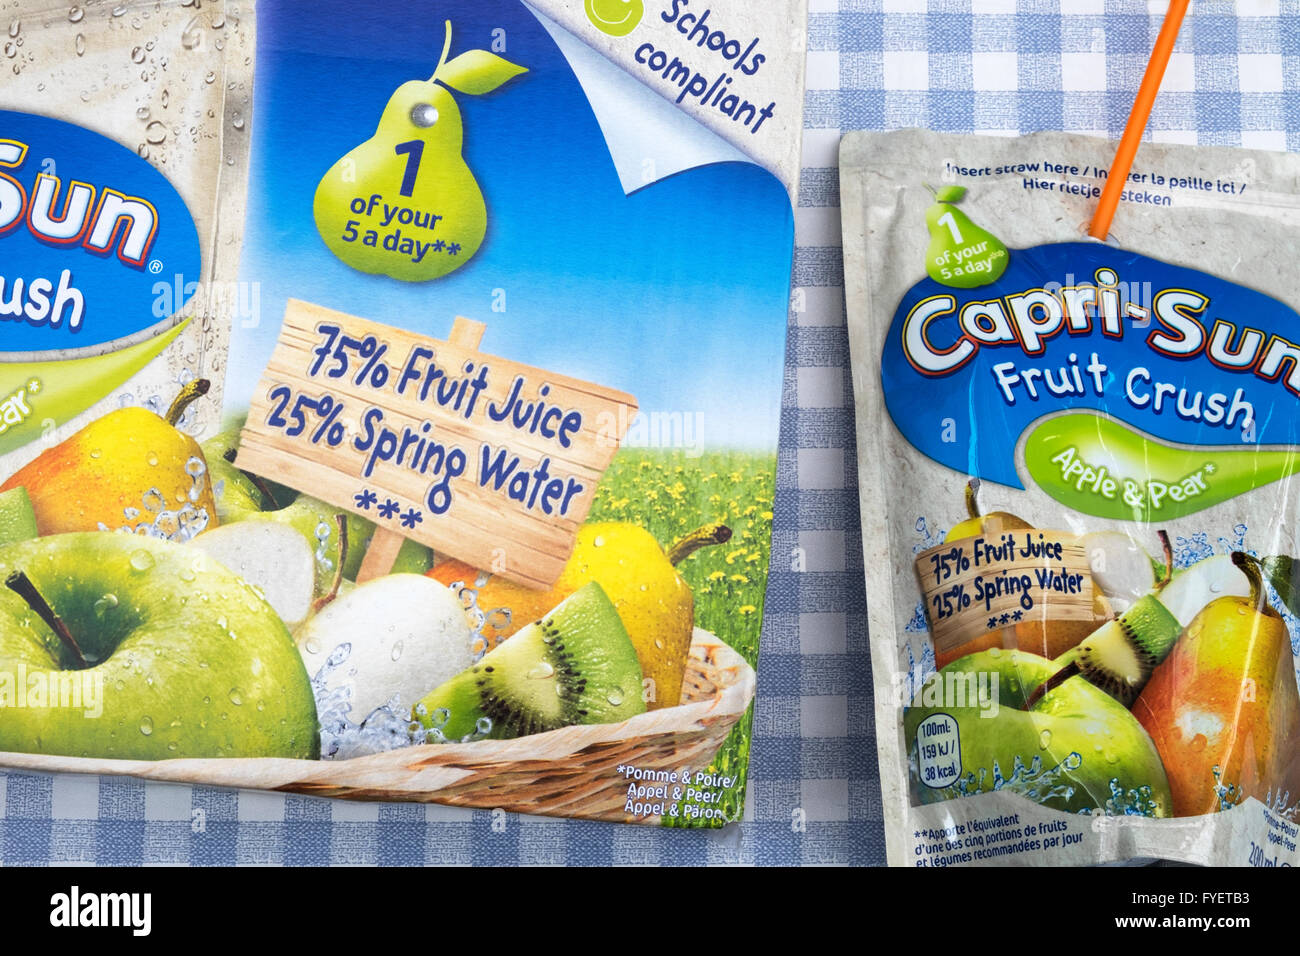 Capri-Sonne Apfel und Birne Fruit Crush trinken Stockfoto